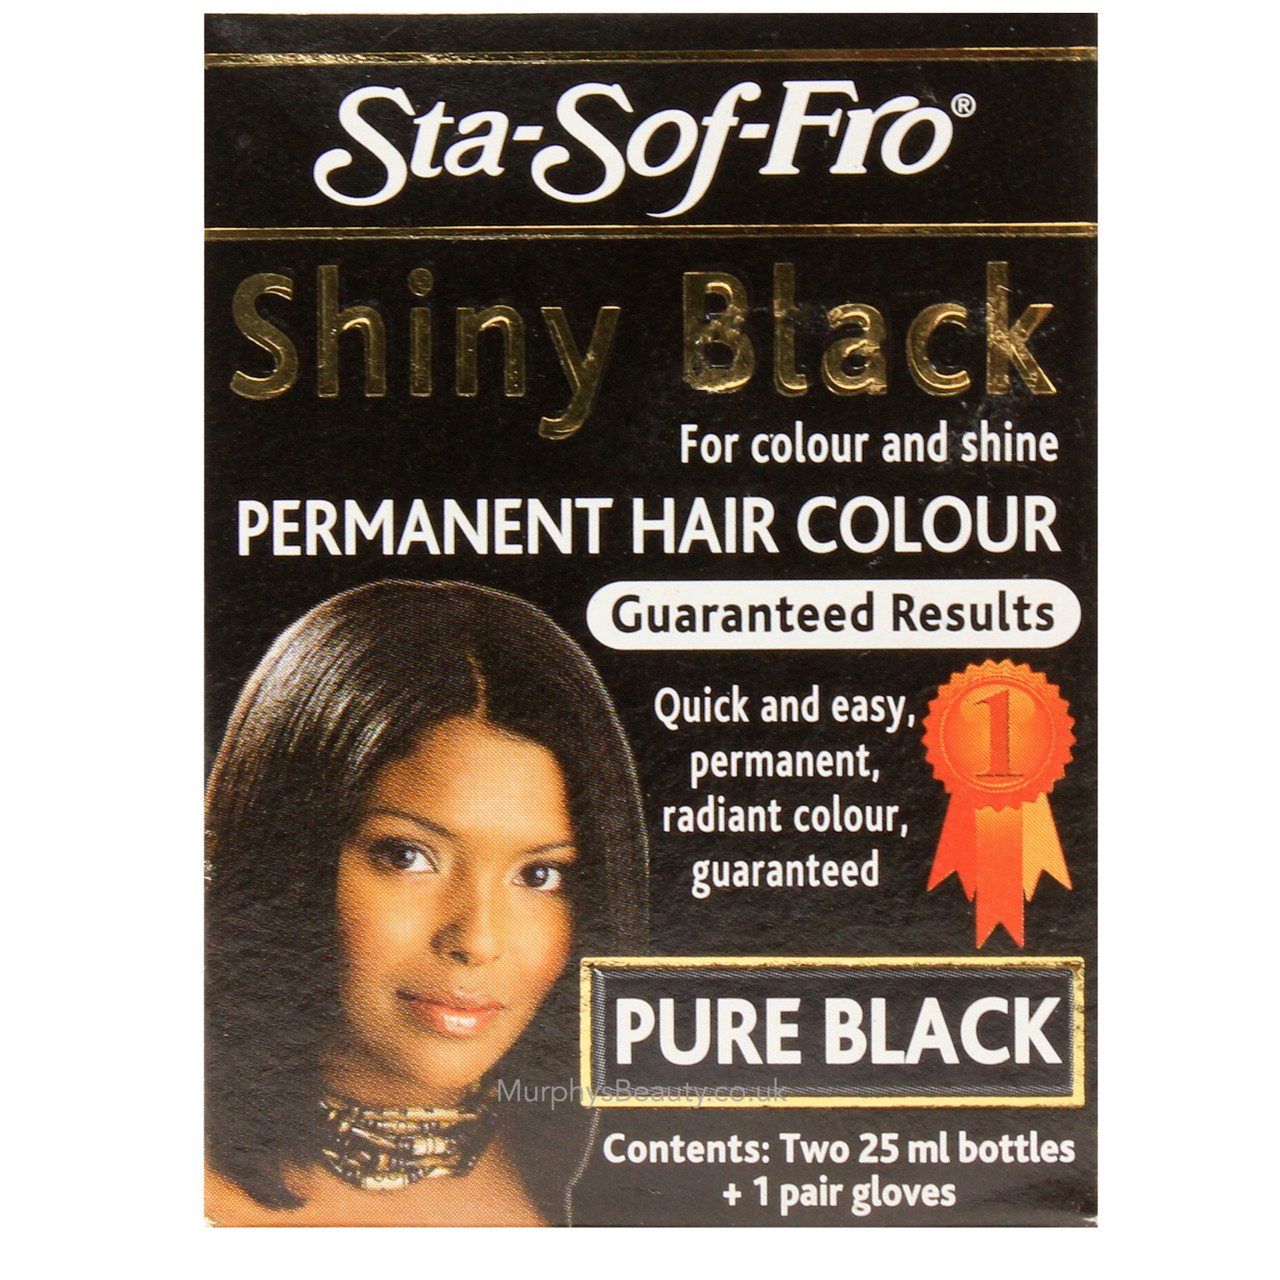 Sta-sof-fro | Shiny Black Permanent Hair Colour | Pure Black (50ml)